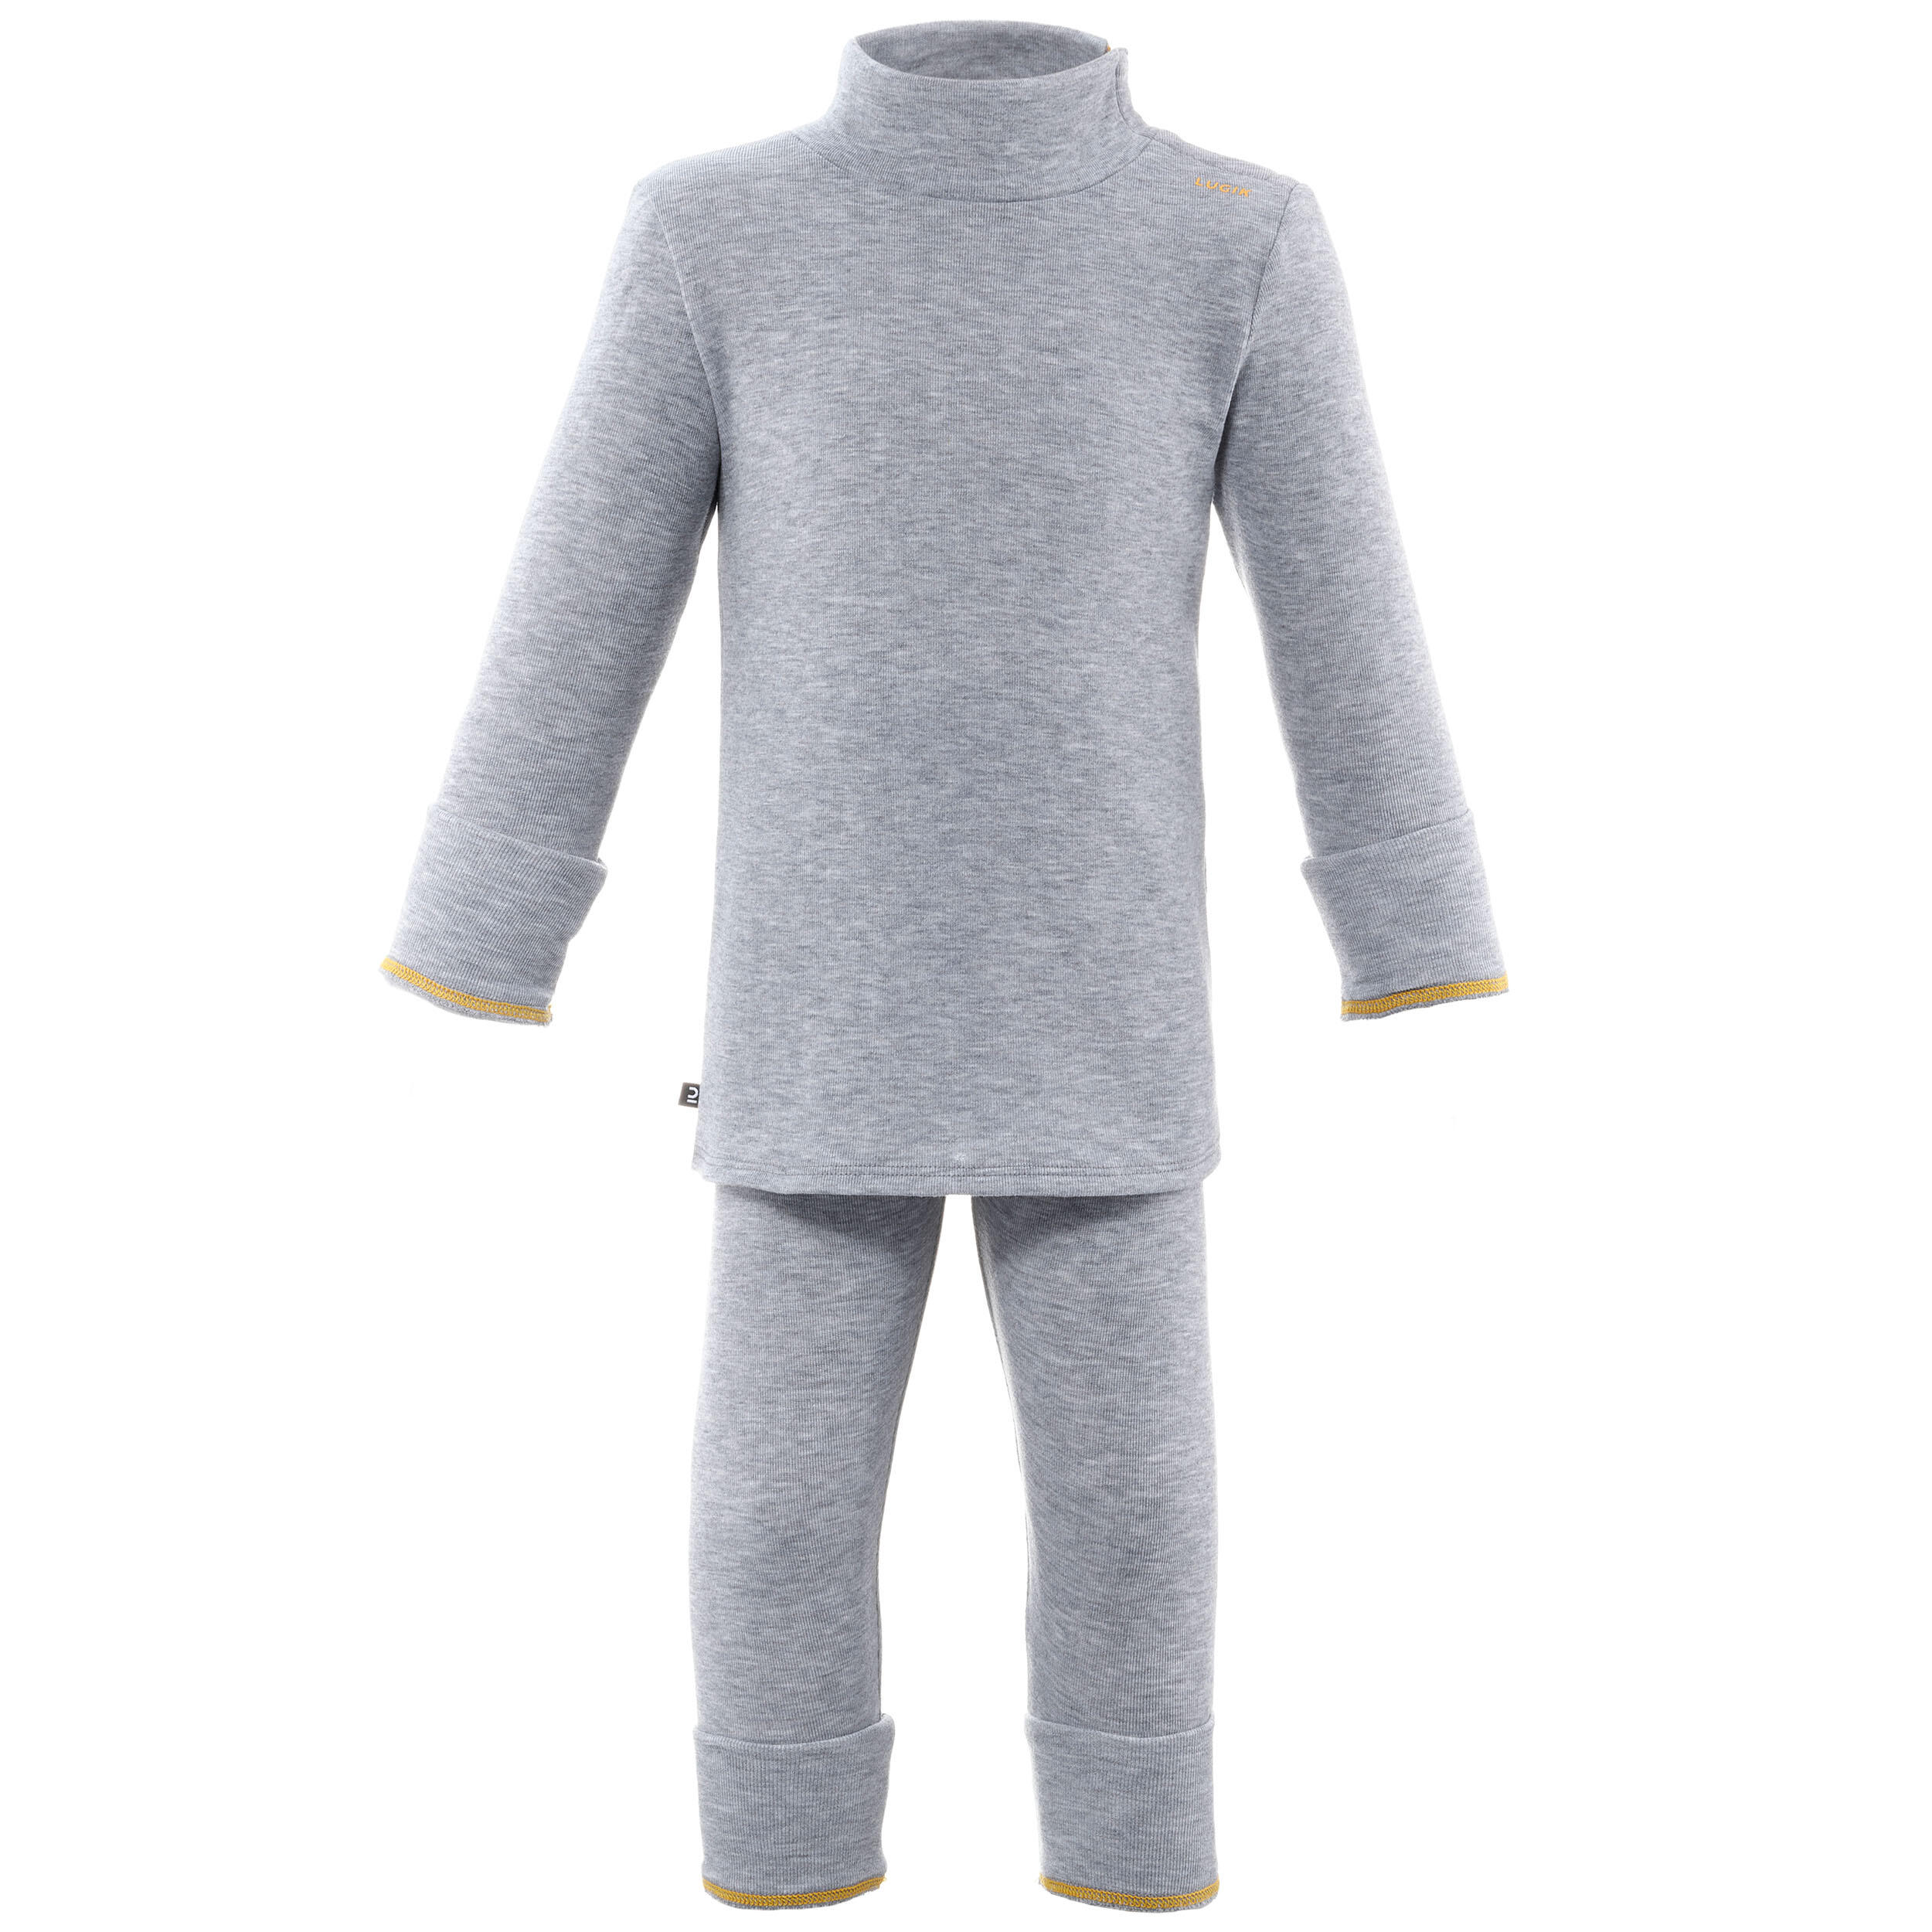 Base layer trousers, Baby ski leggings - WARM grey 10/10